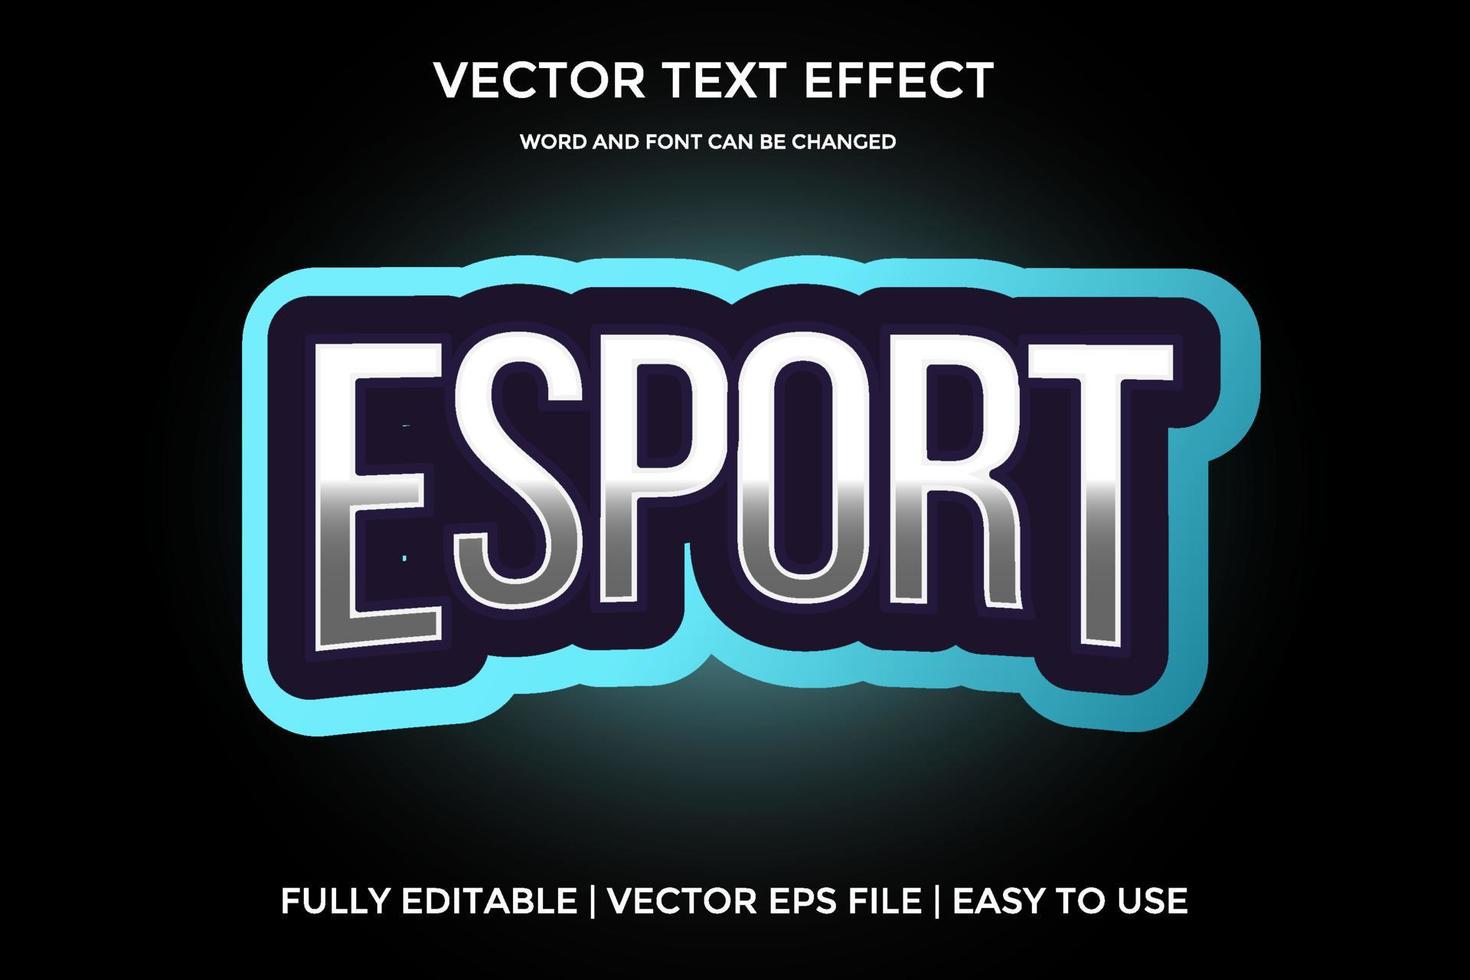 Esport-Vektor-Texteffekt editierbar vektor